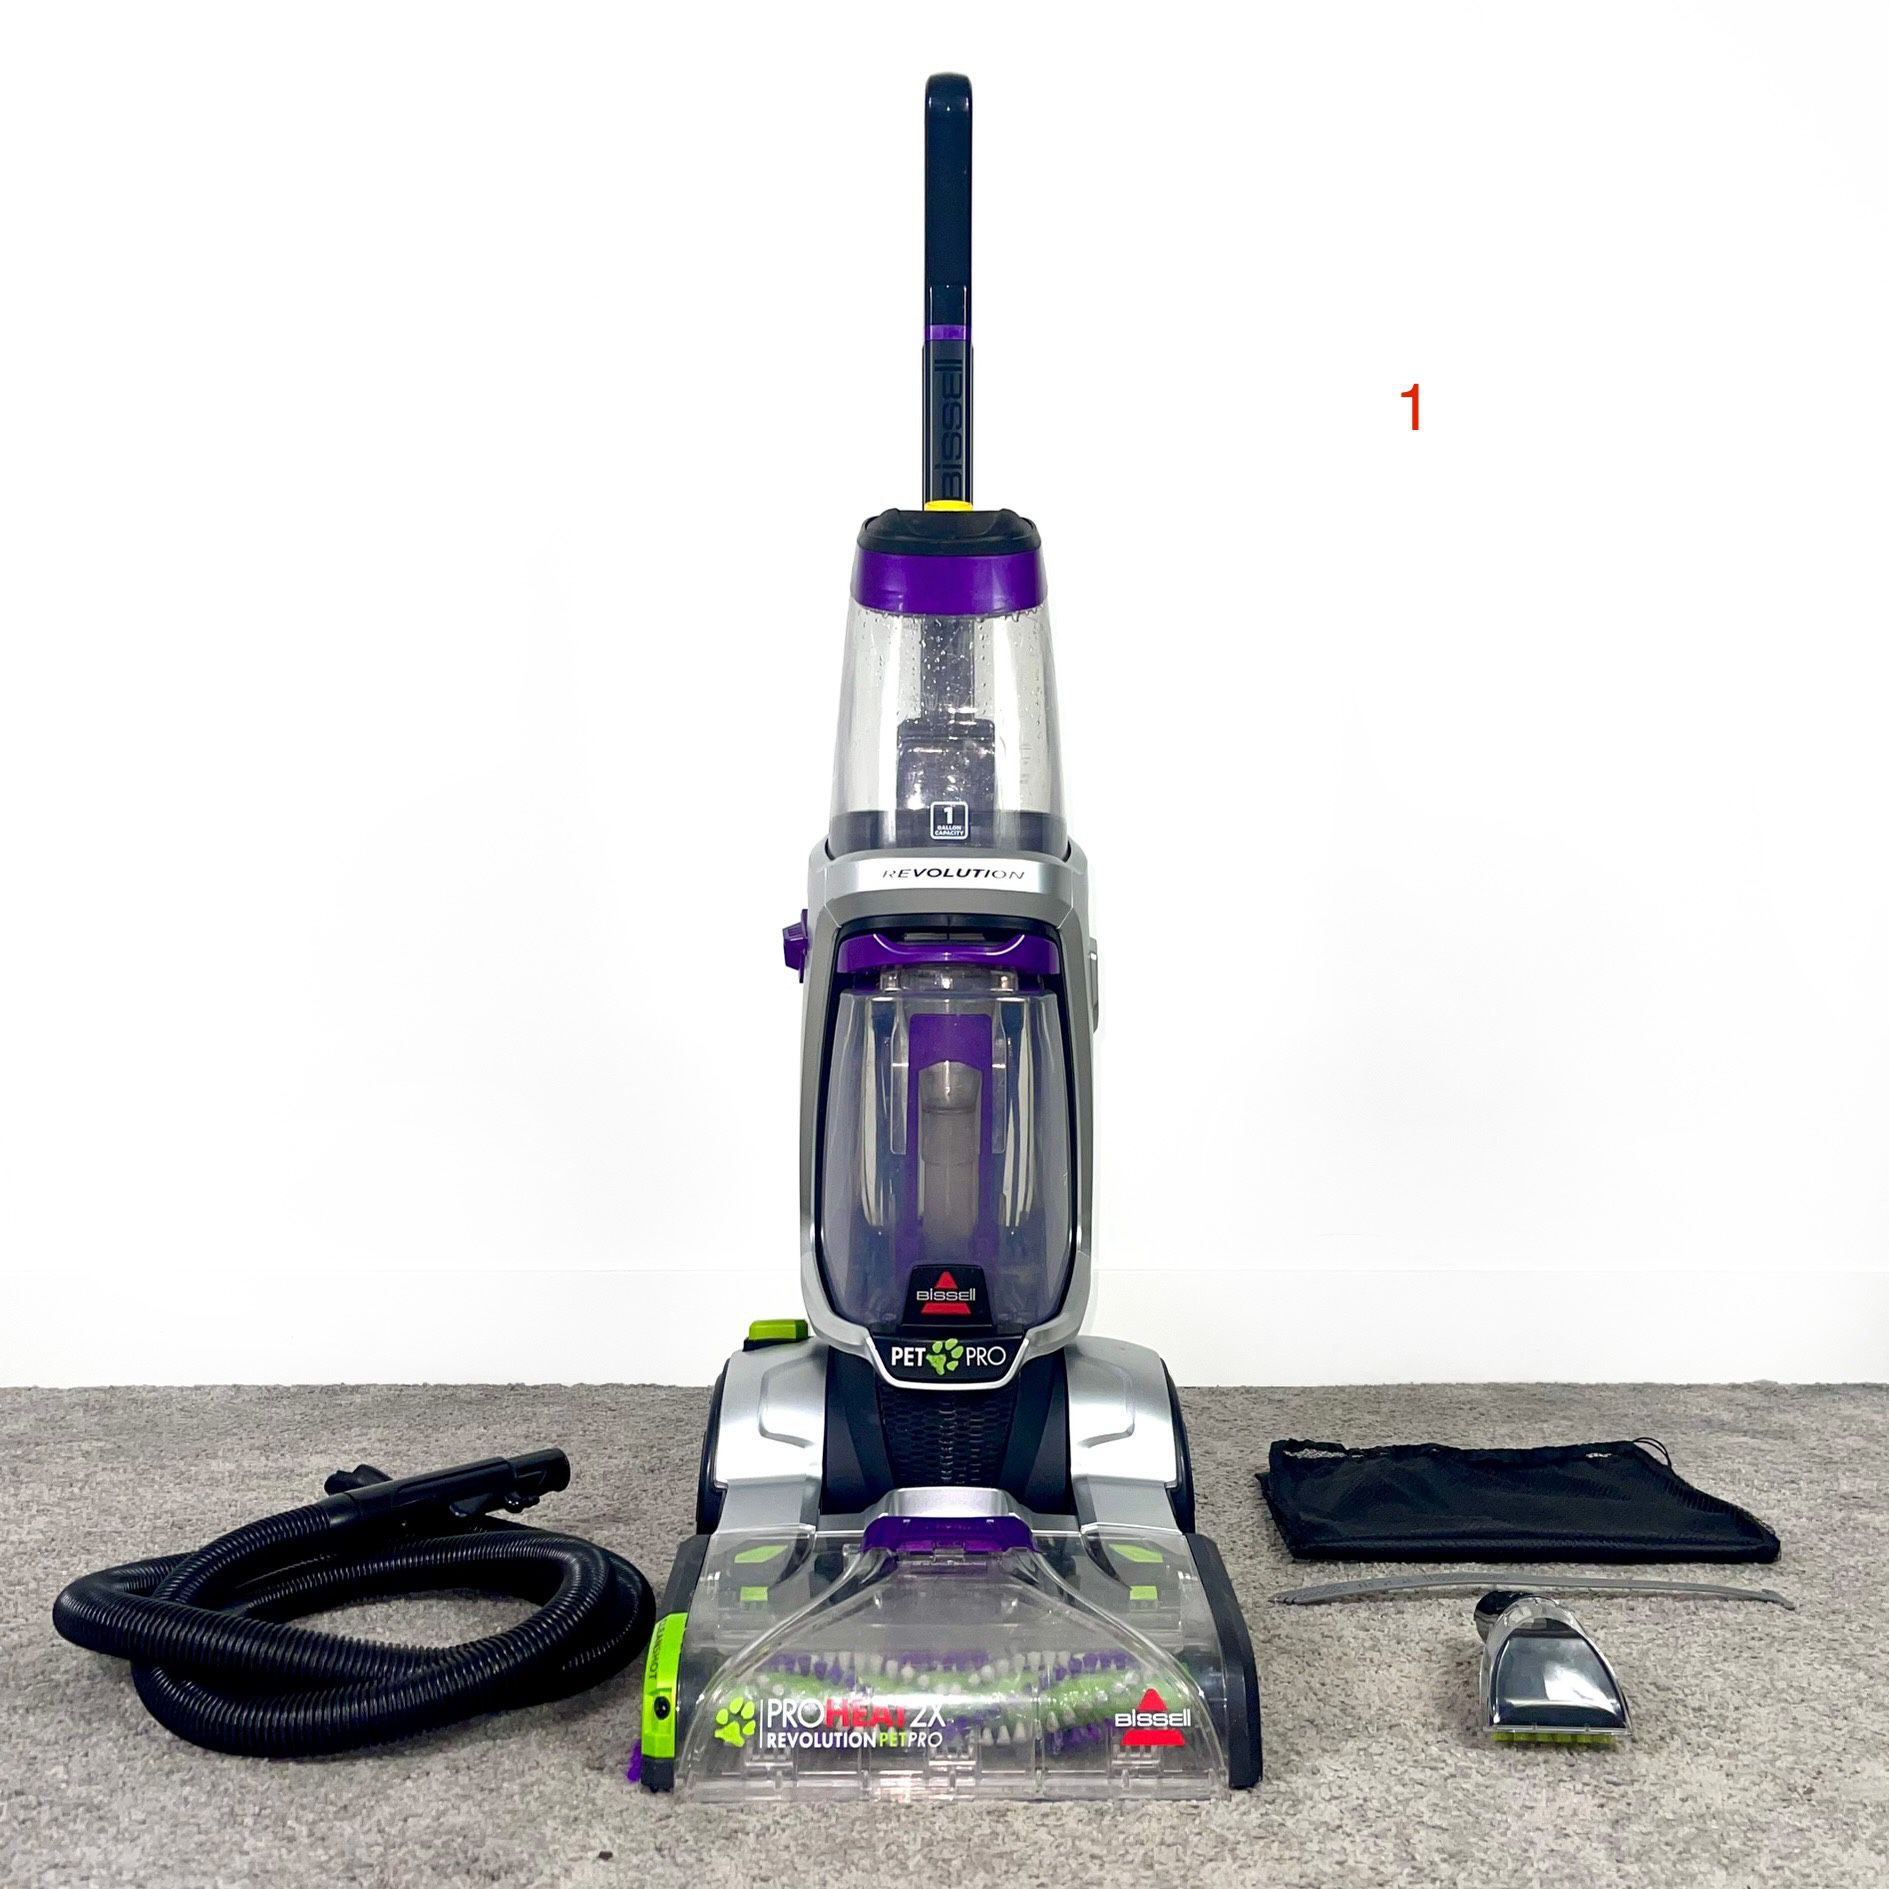 Bissell Revolution Pro Heat 2X Pet Pro Carpet Shampoo Cleaner w/ accessories - Vacuum